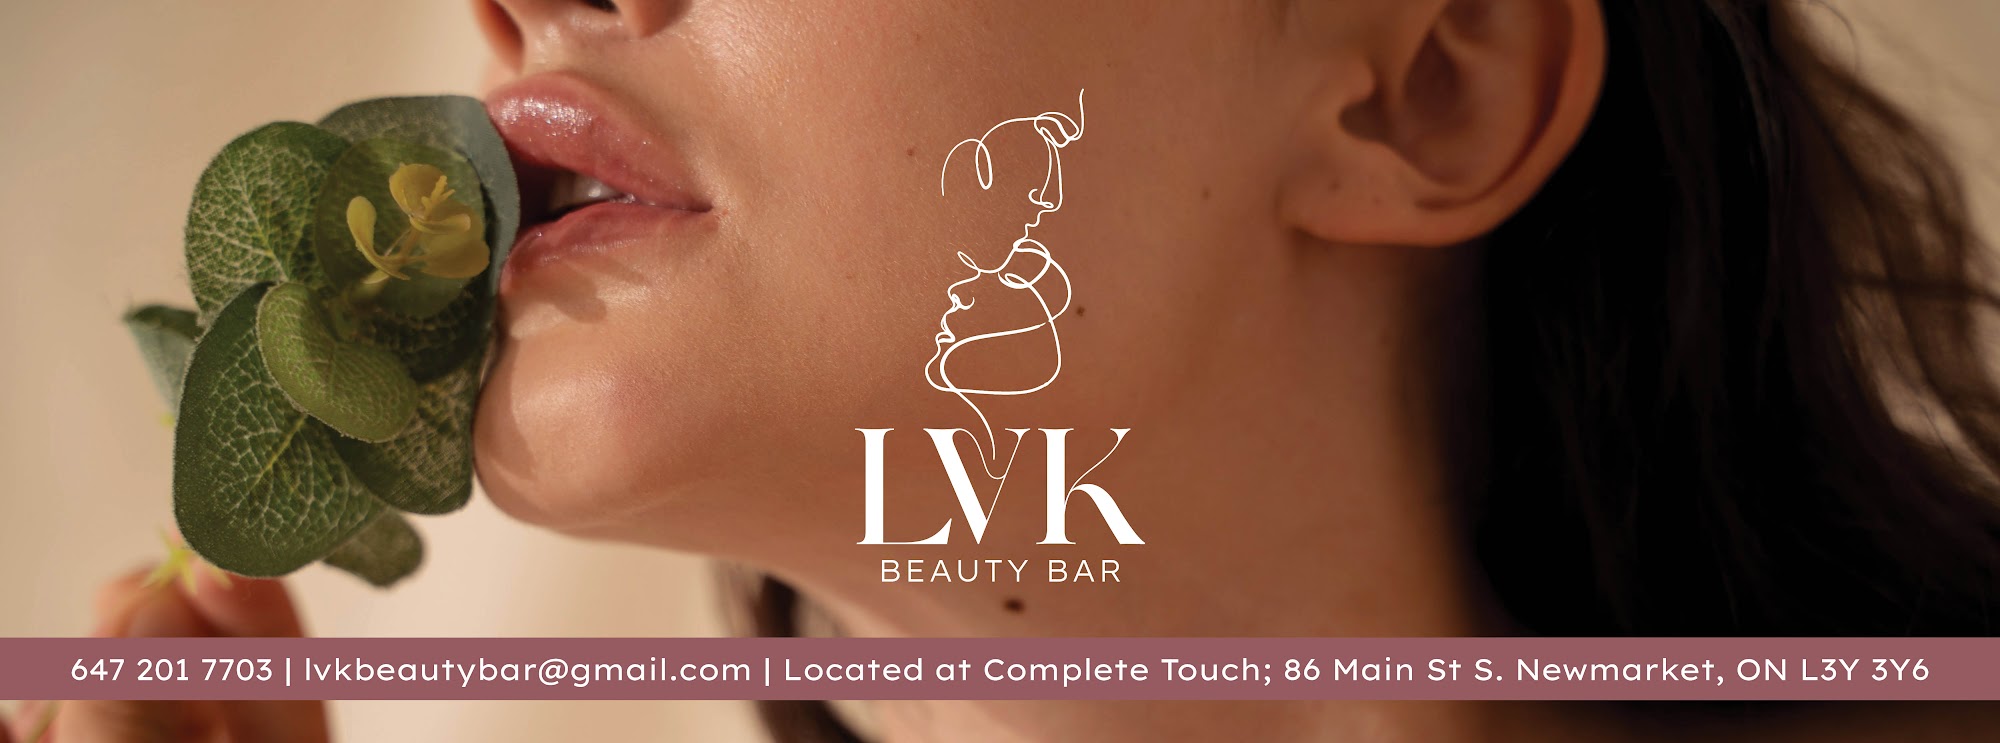 LVK Beauty Bar